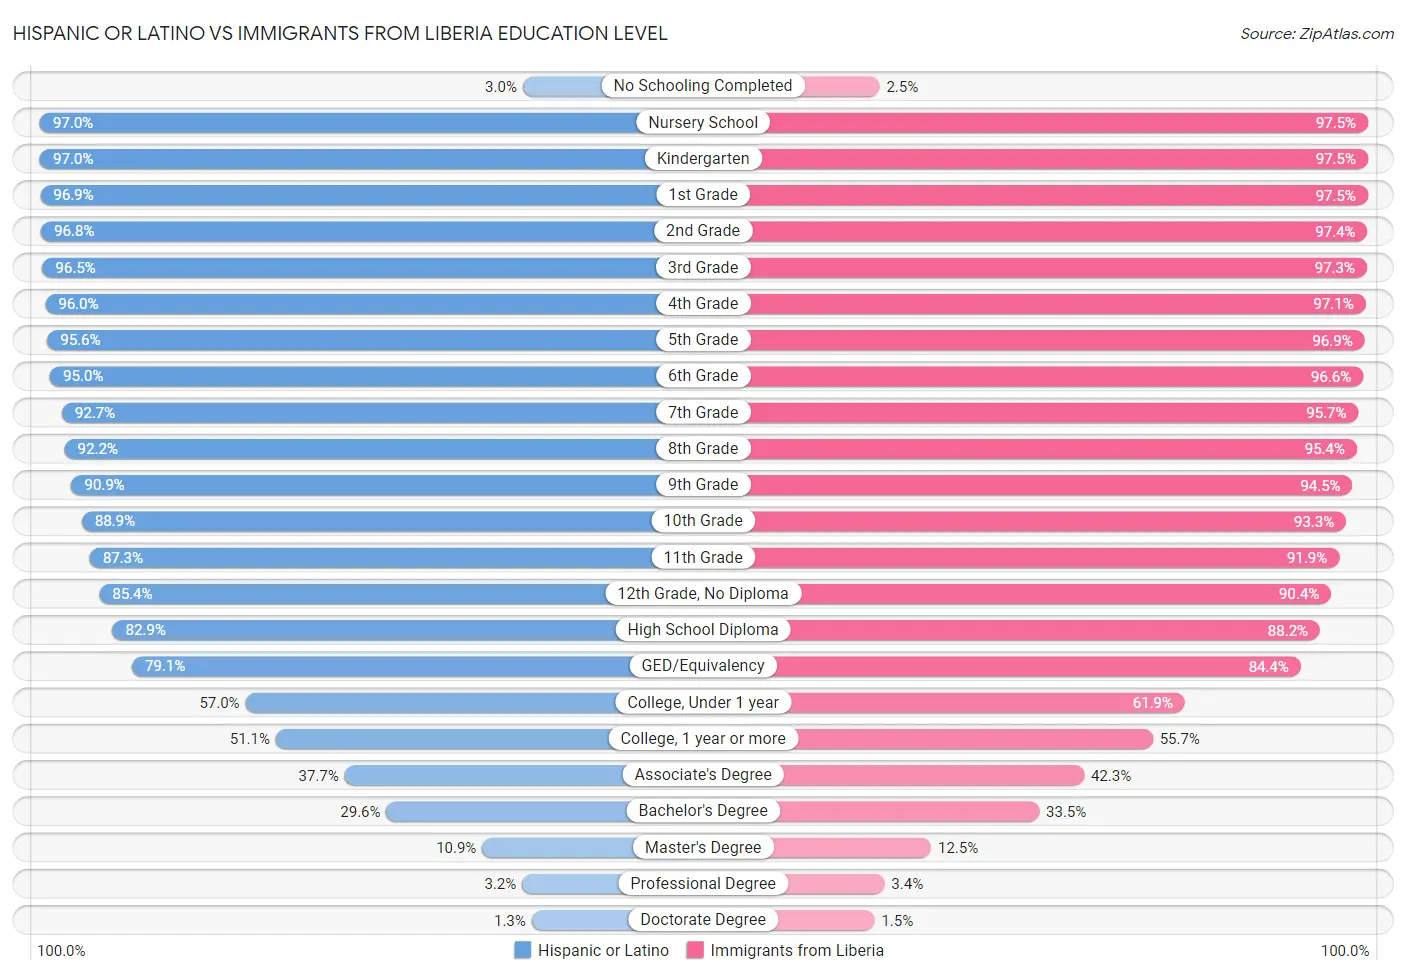 Hispanic or Latino vs Immigrants from Liberia Education Level